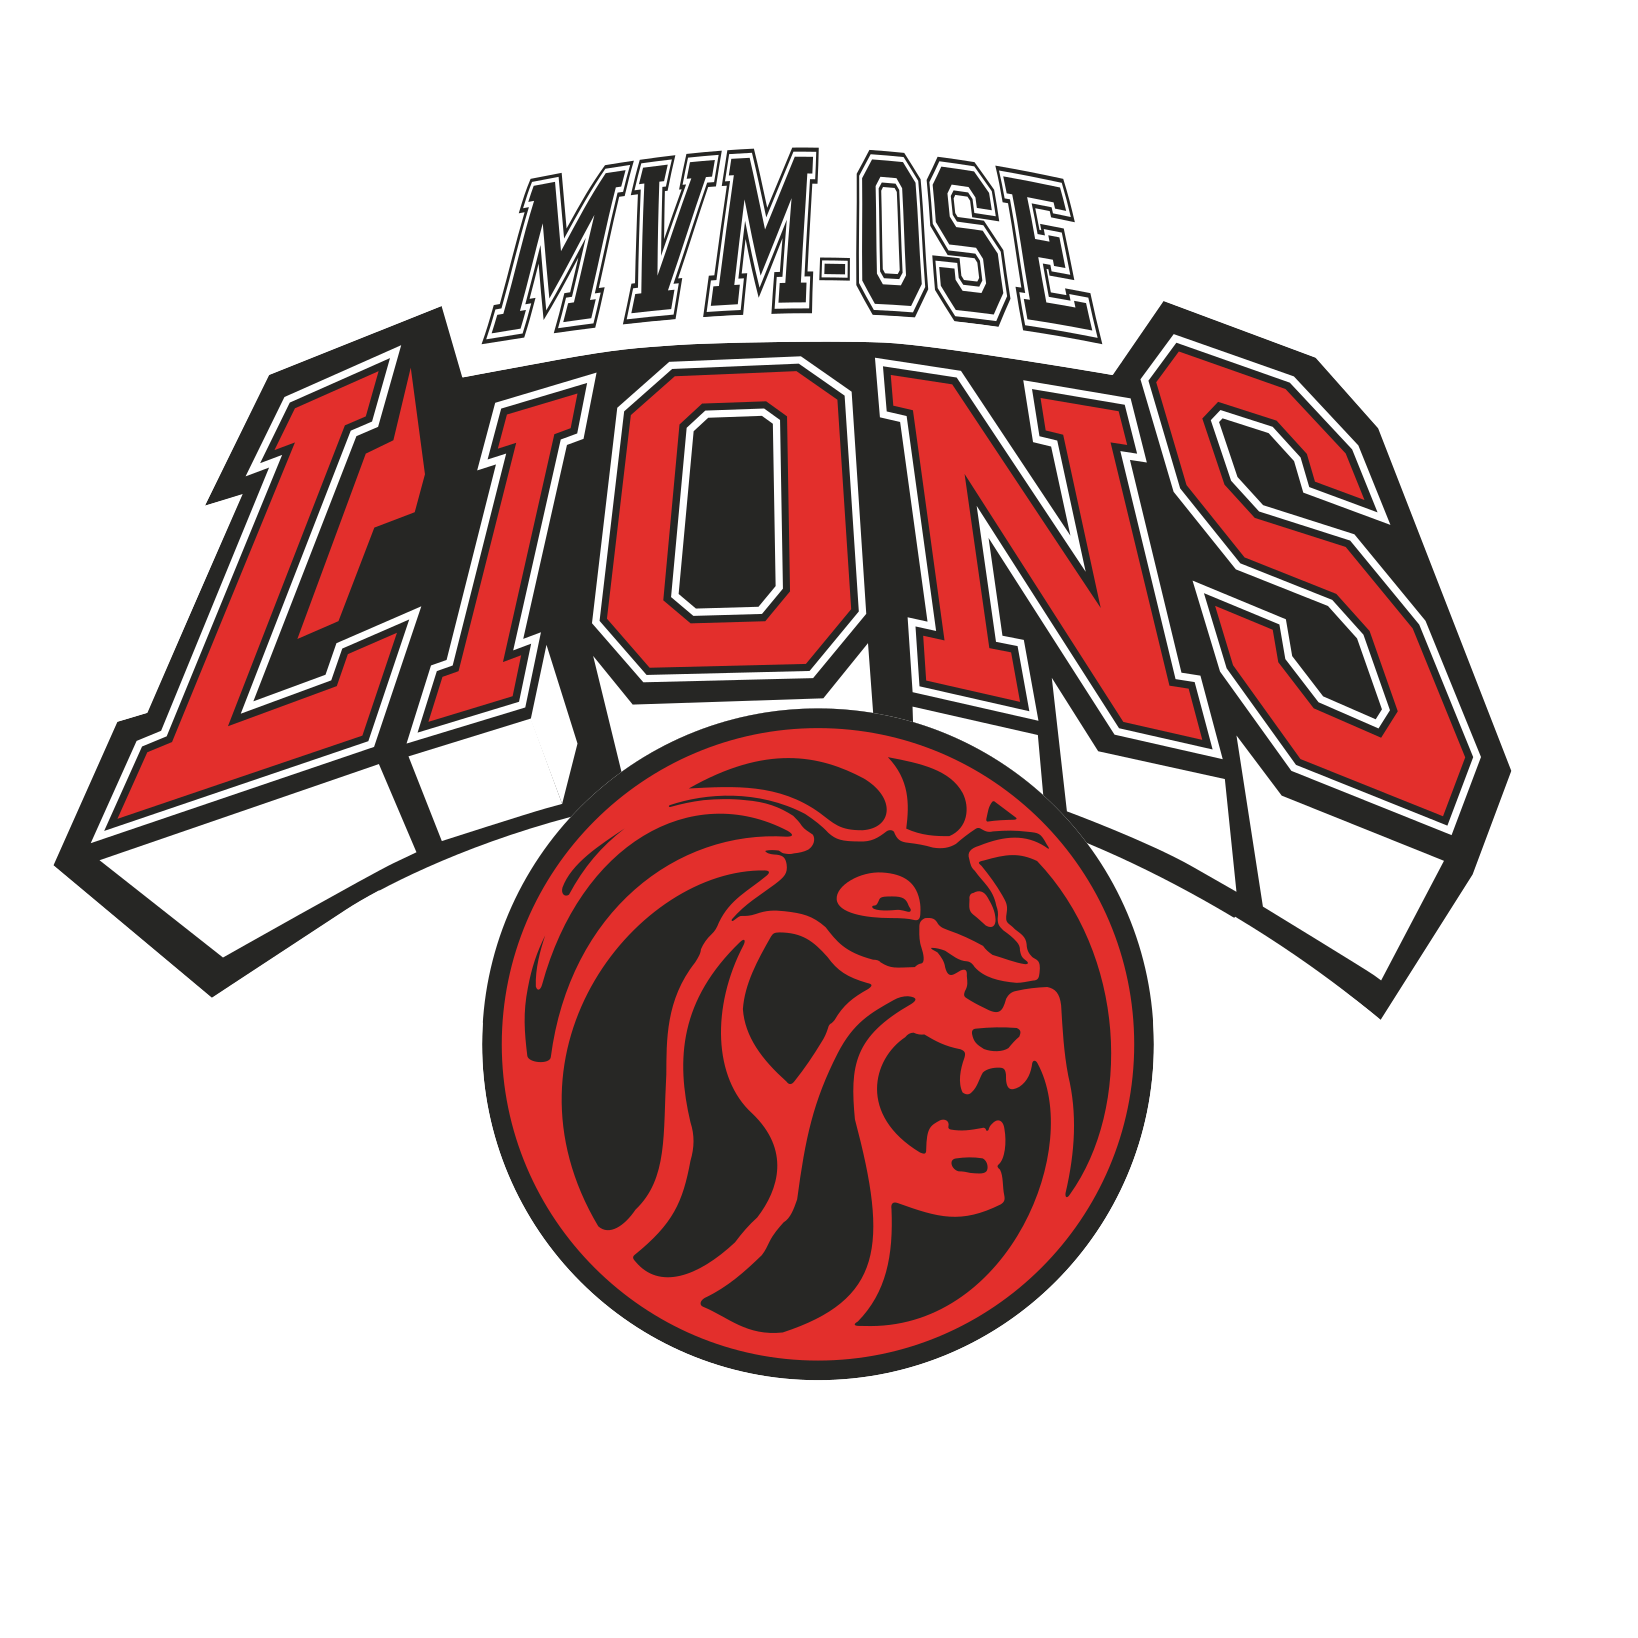 MVM-OSE Lions